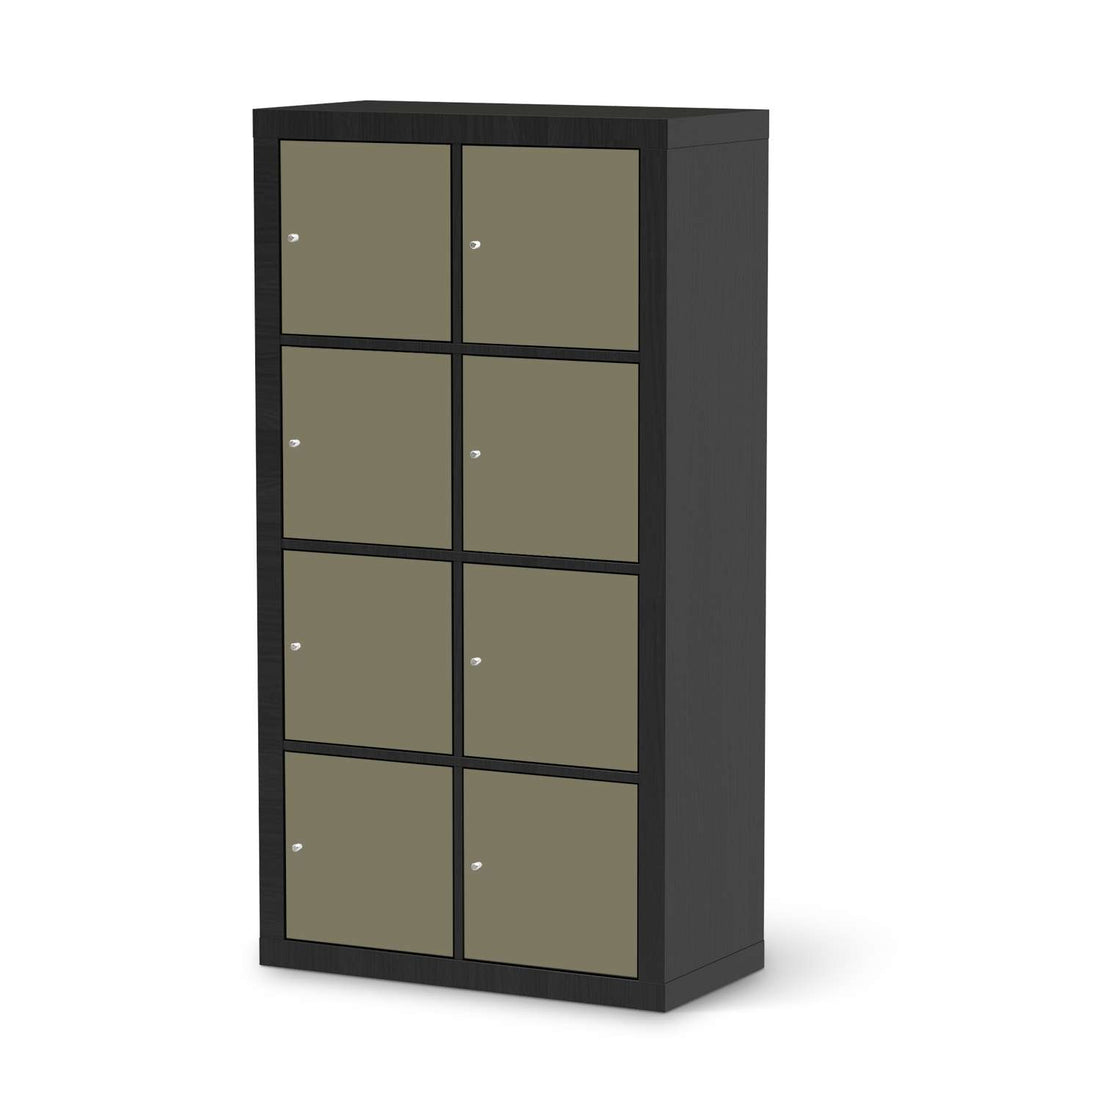 Klebefolie Braungrau Light - IKEA Expedit Regal 8 Türen - schwarz